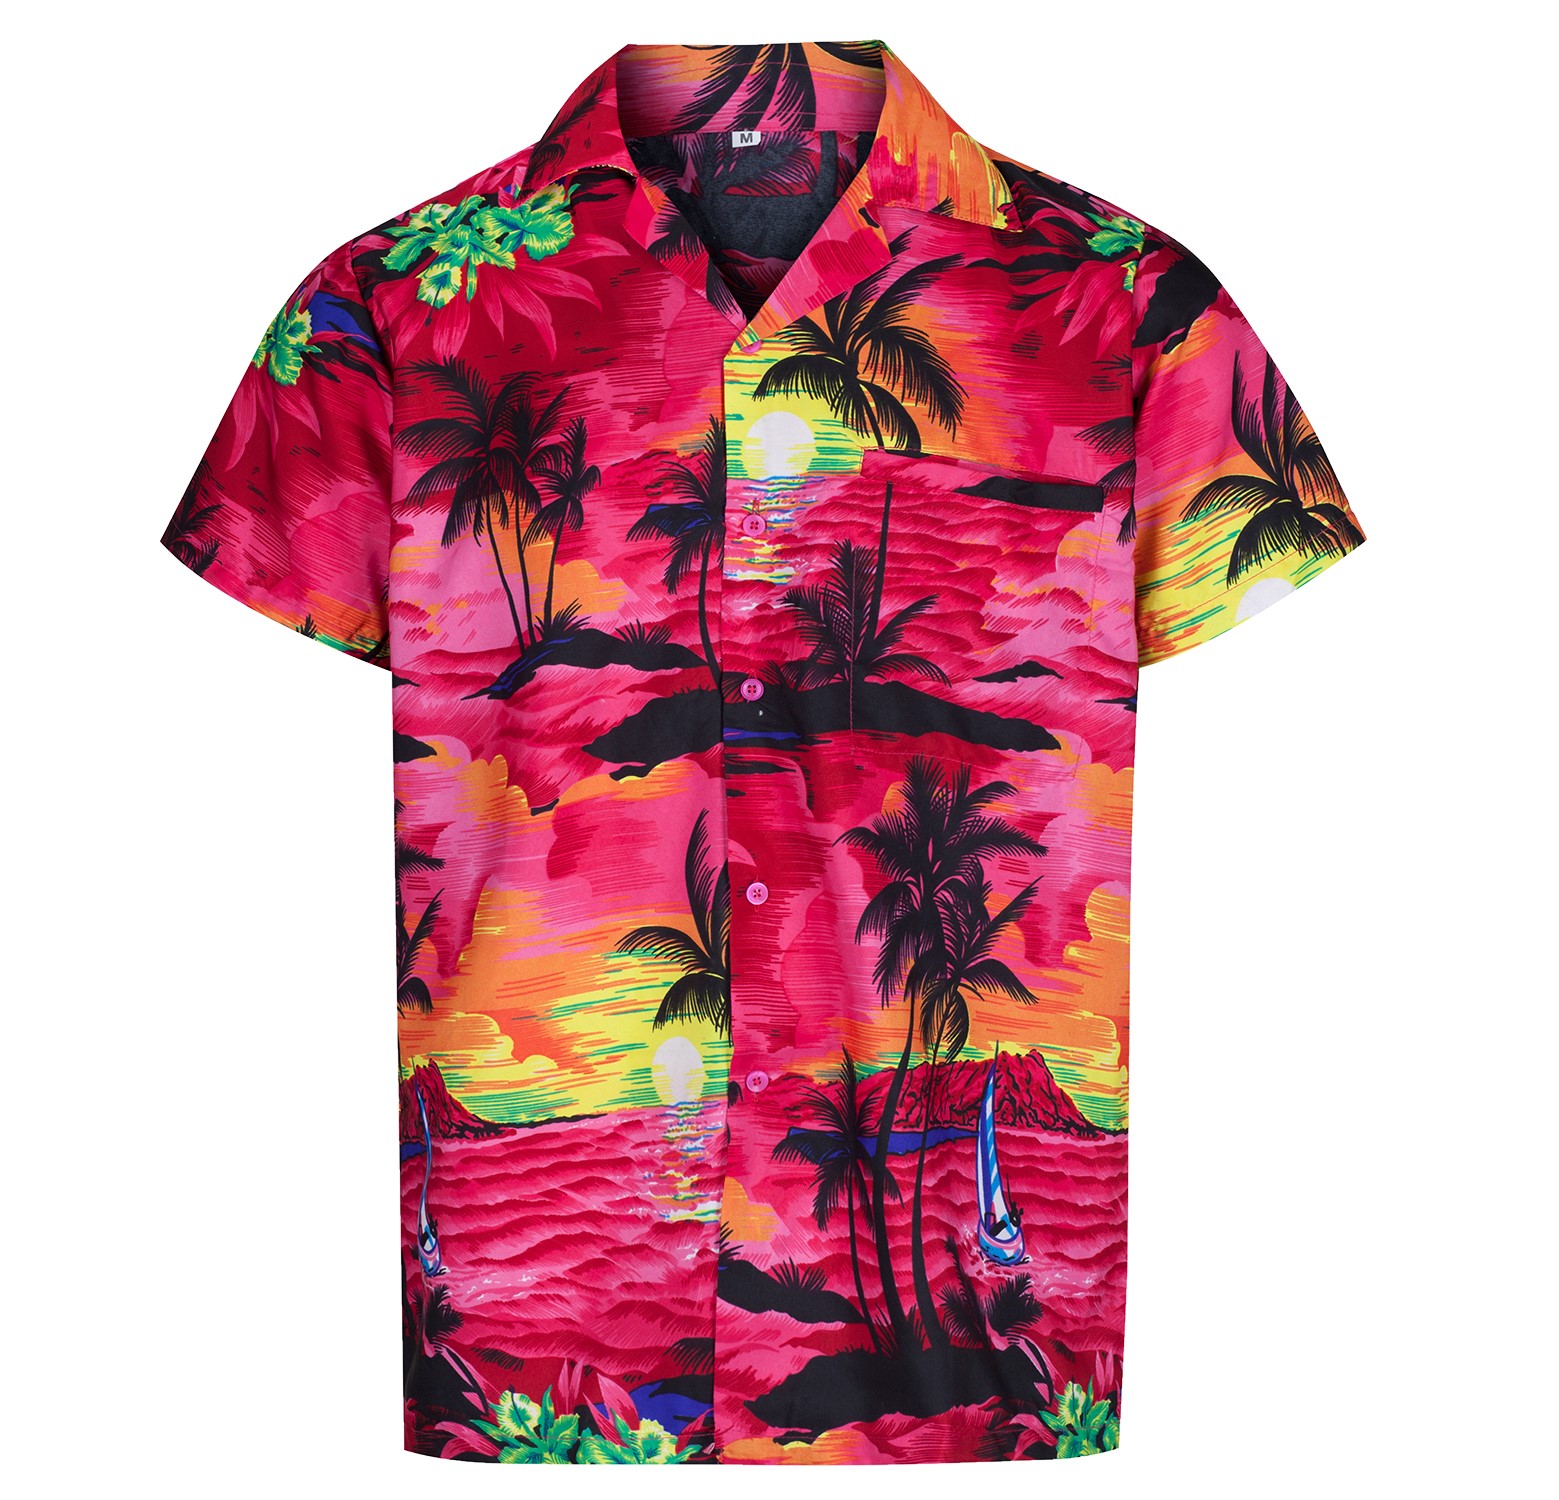 Men's Hawaiian shirt stag beach Hawaii summer holiday aloha party fancy dress